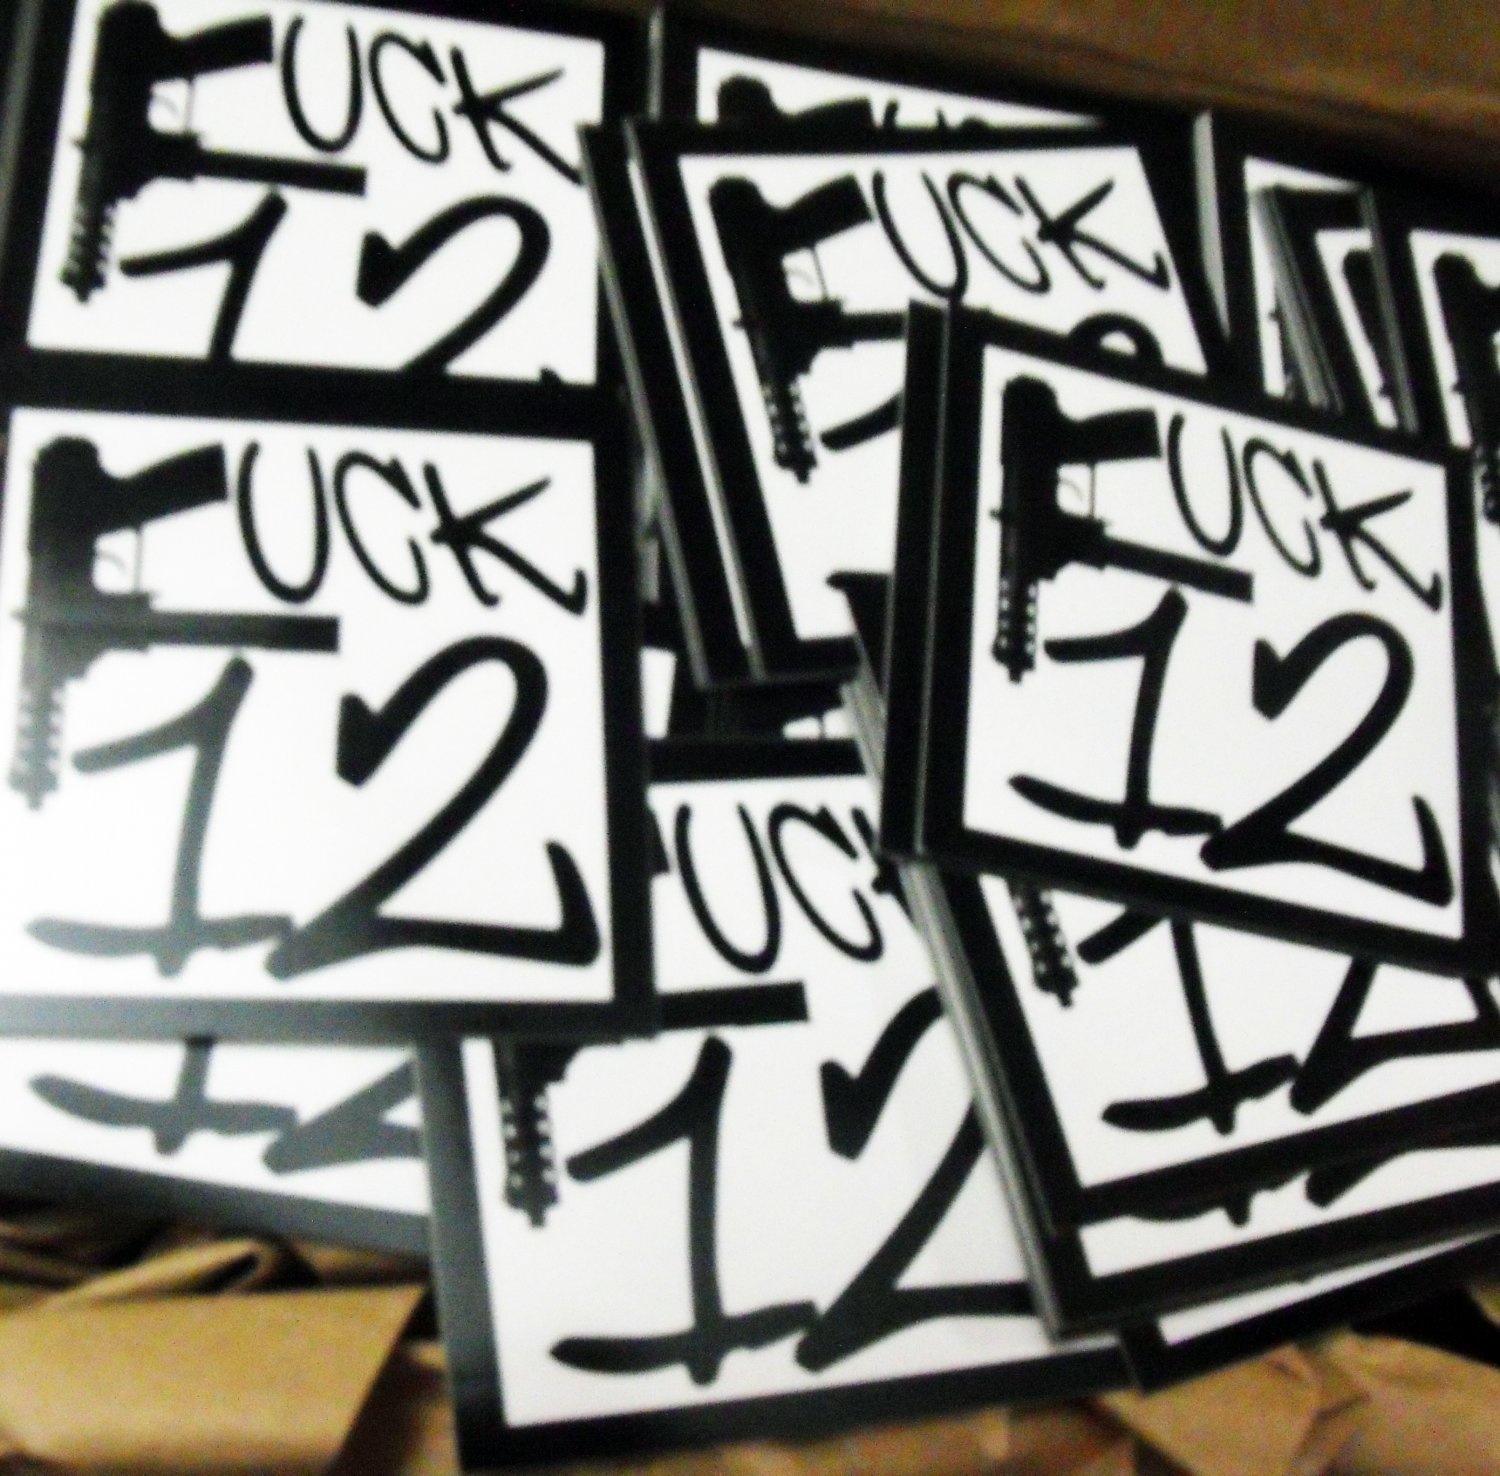 300 FUCK 12 2.5" x 2.5" stickers